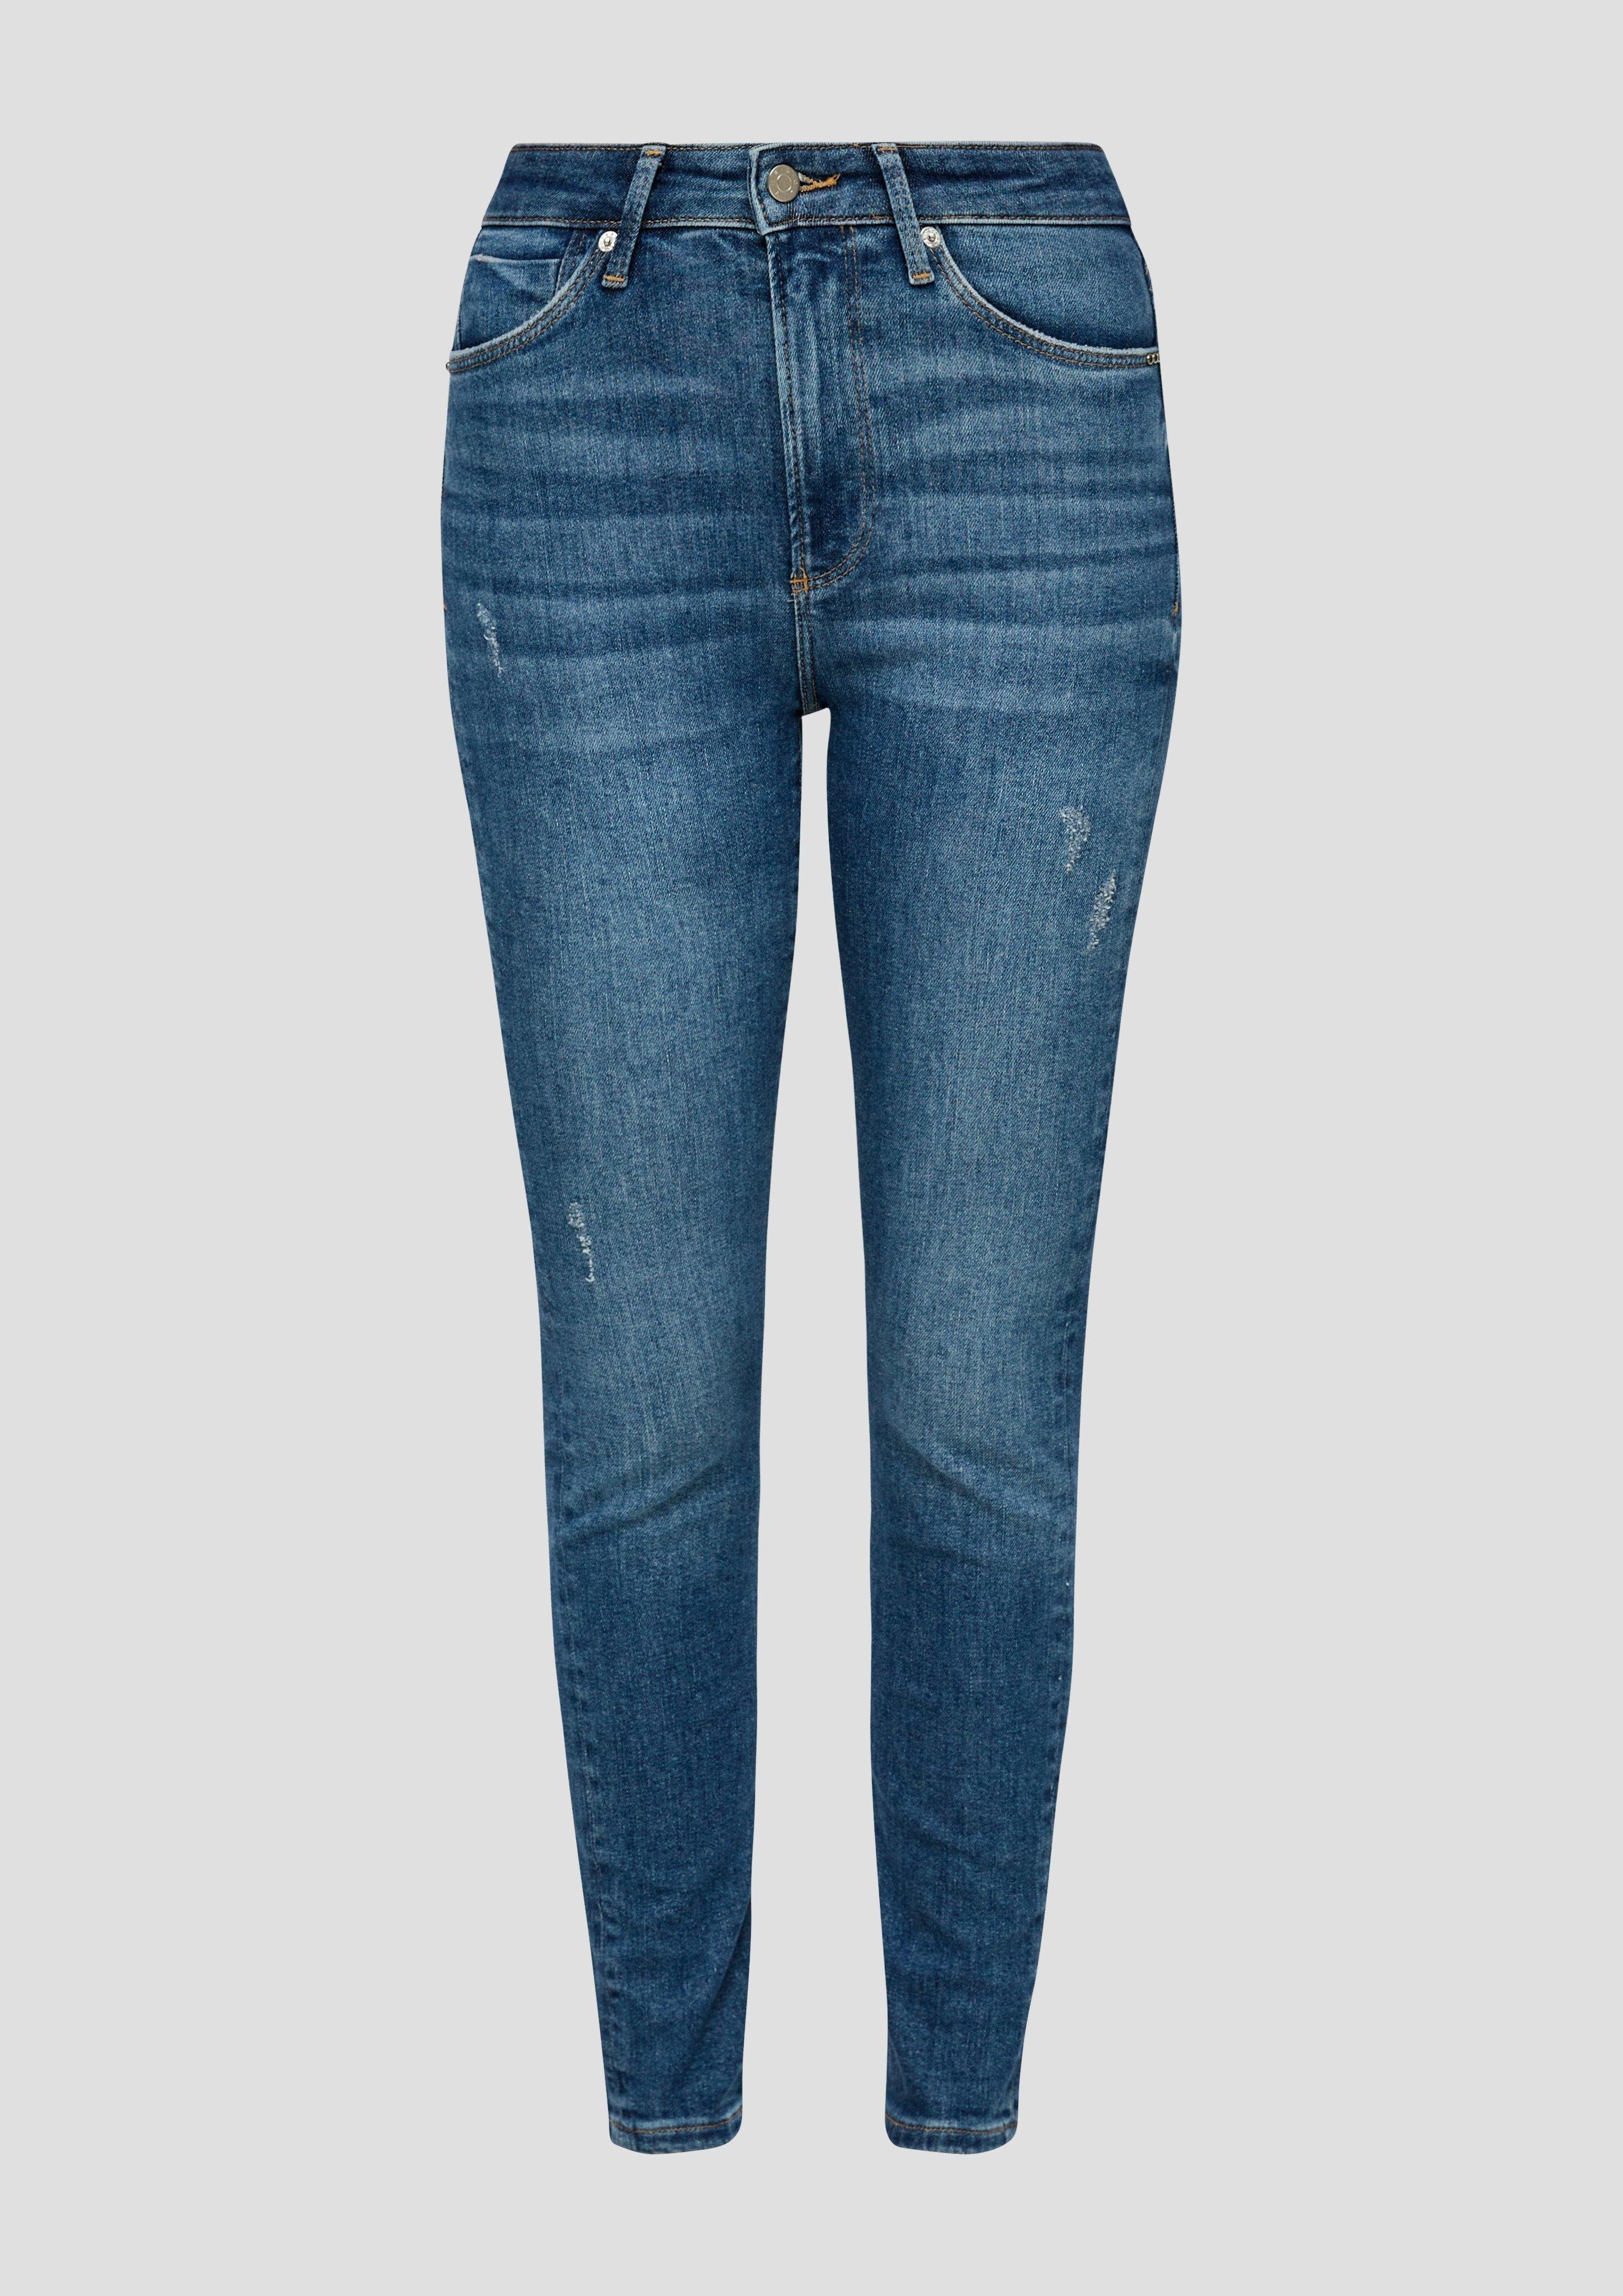 s.Oliver 7/8-Jeans Jeans Izabell / Leder-Patch, Fit / Waschung / Skinny Rise blau Leg High Nieten, Skinny